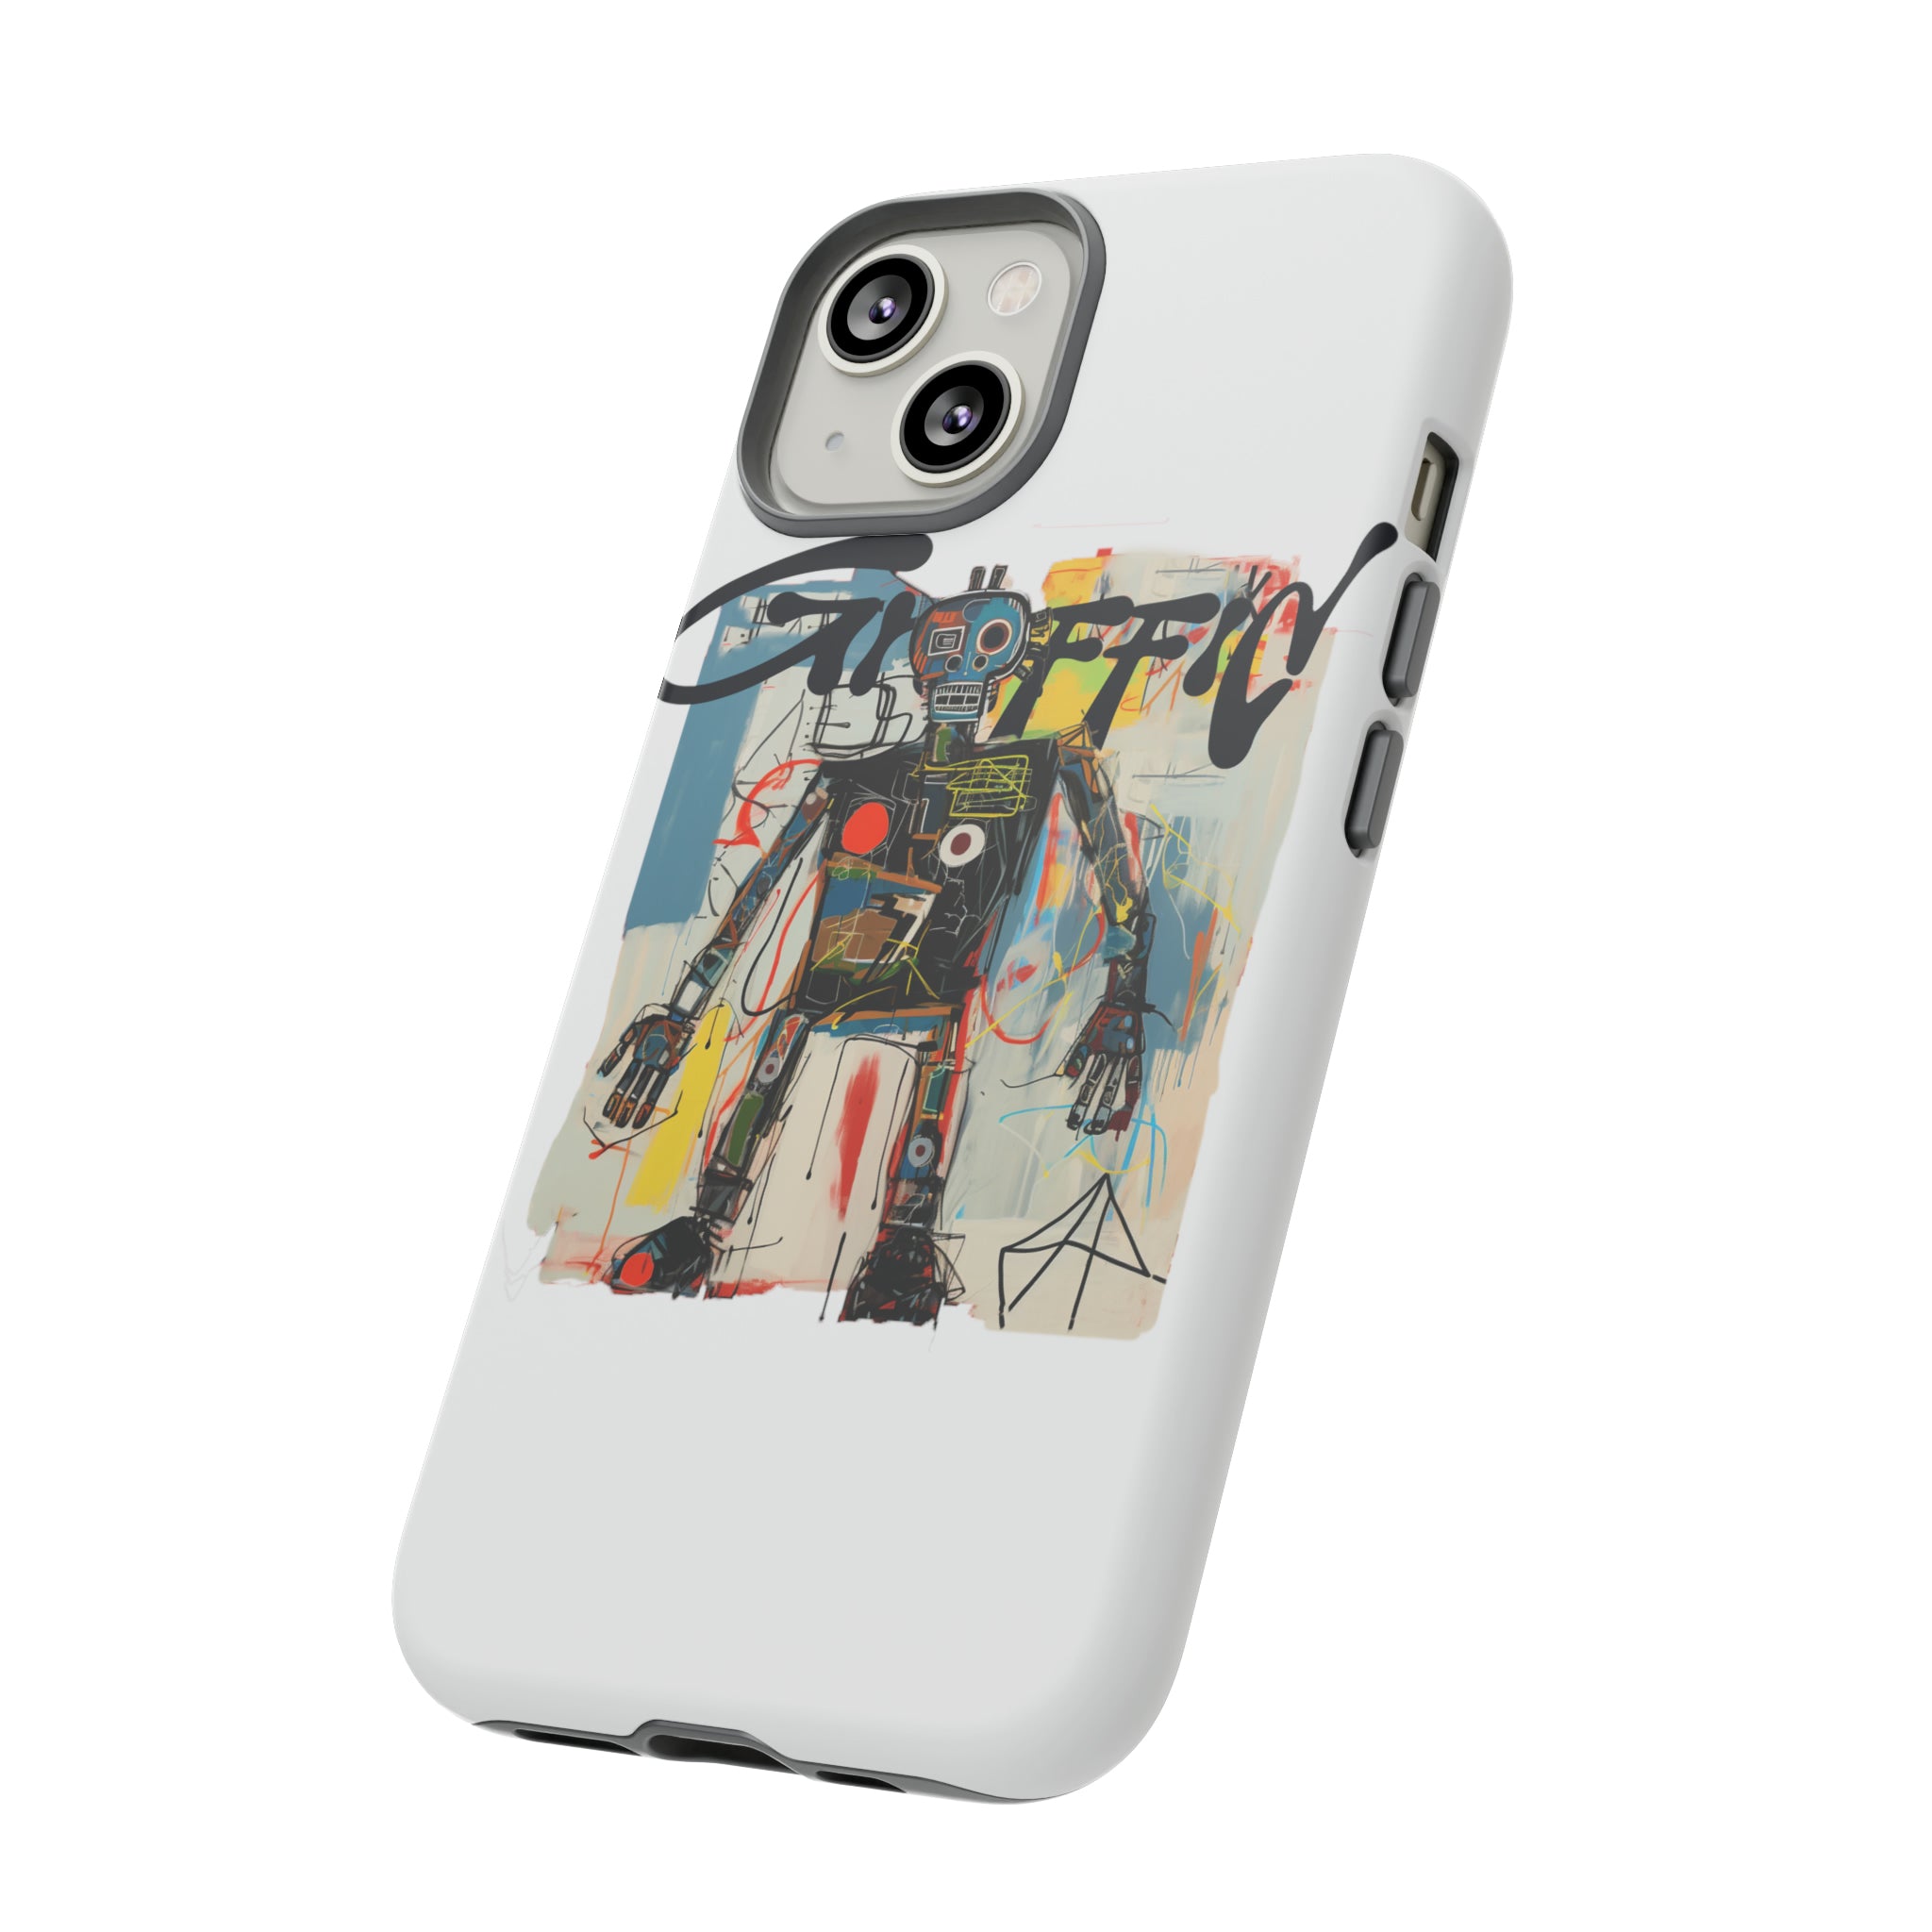 Graffid Robot Revolution iPhone Case